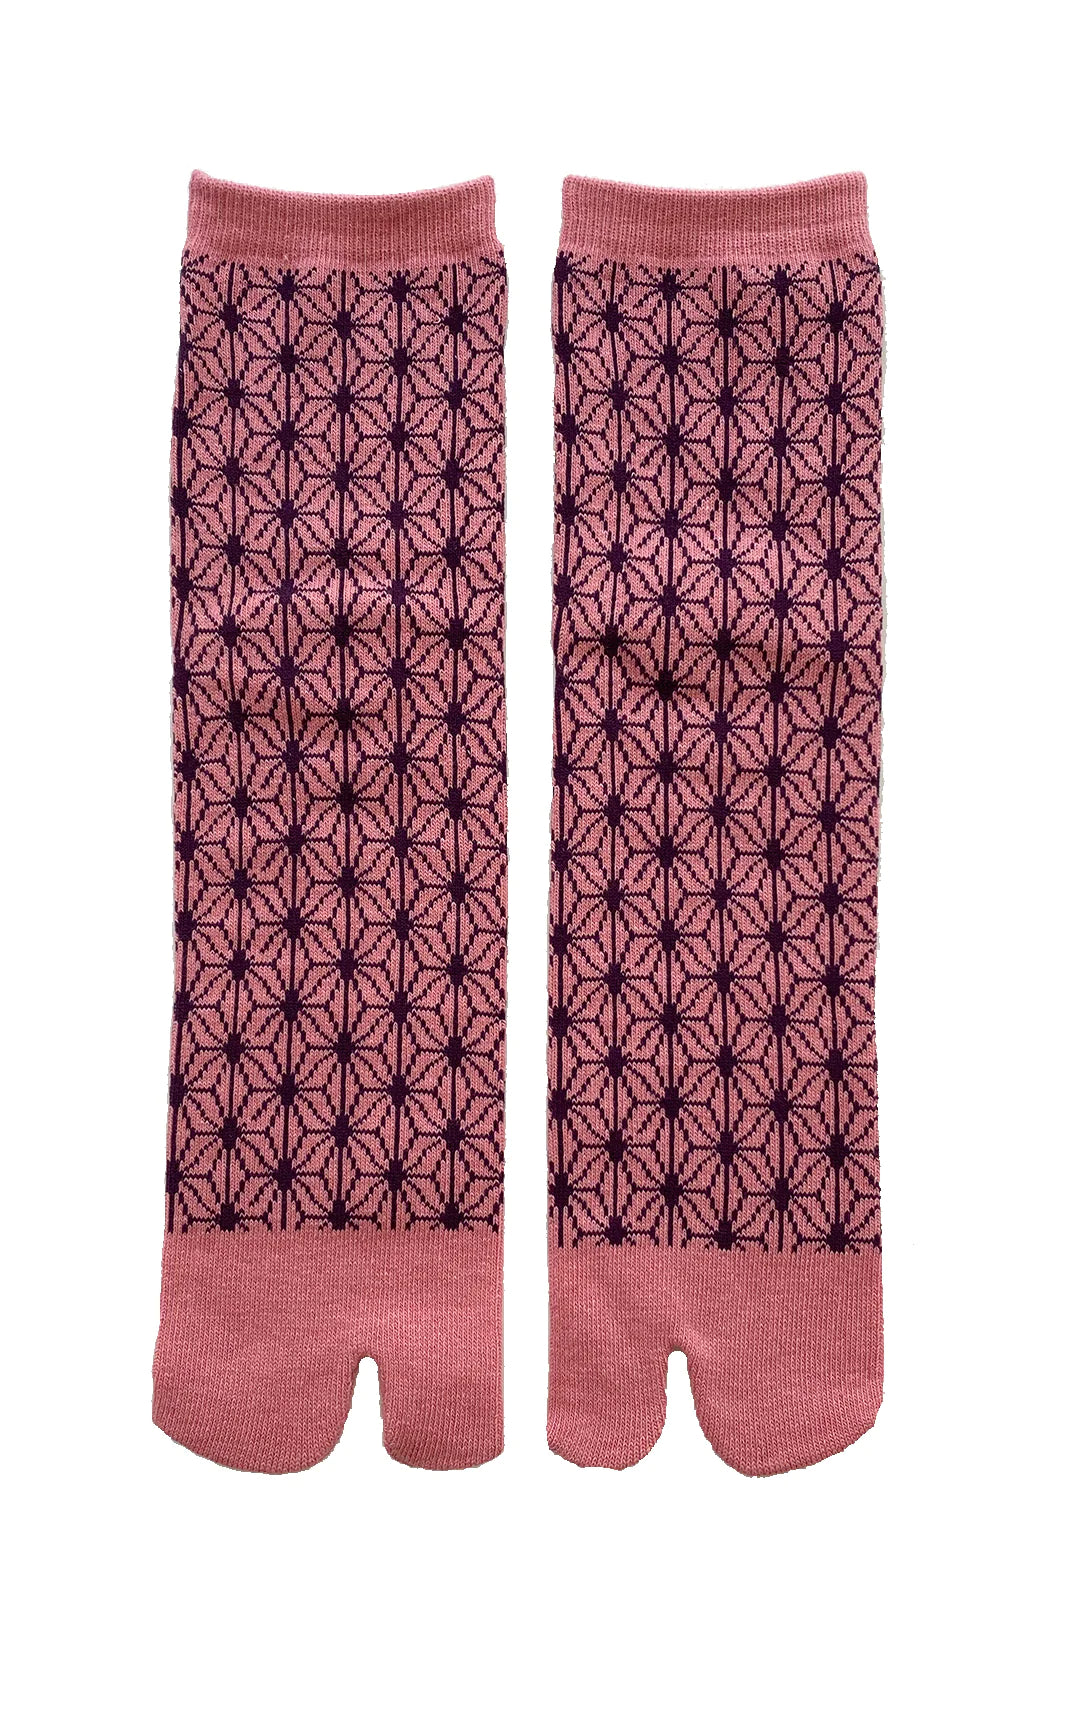 NINJA SOCKS Hemp Leaves Tabi Toe Socks in Pink color